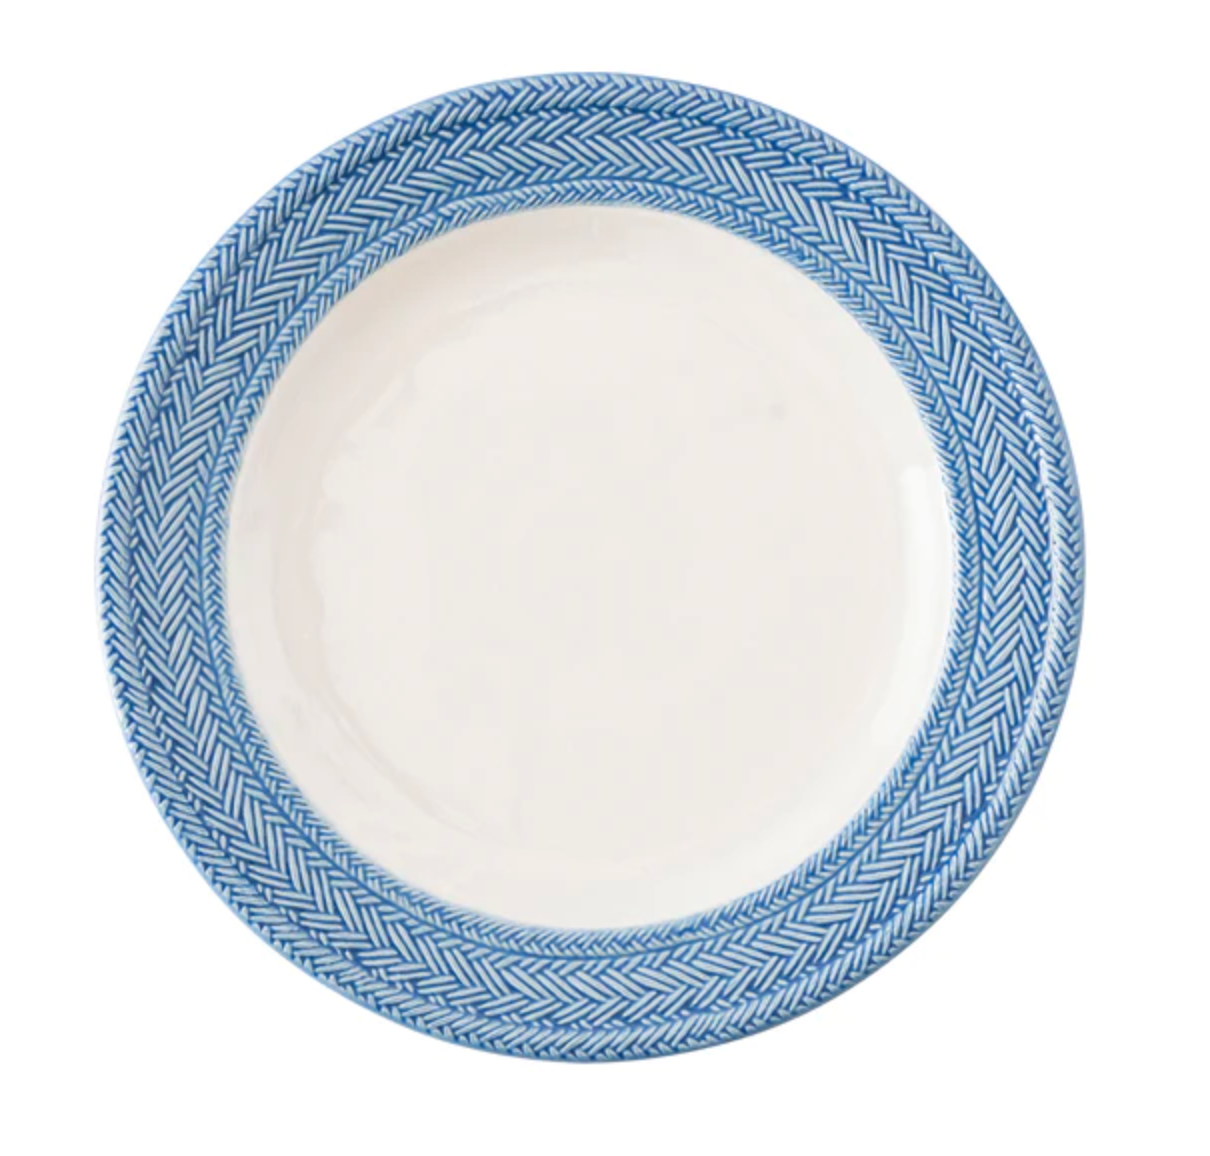 Le Panier Dinner Plate-Delft Blue